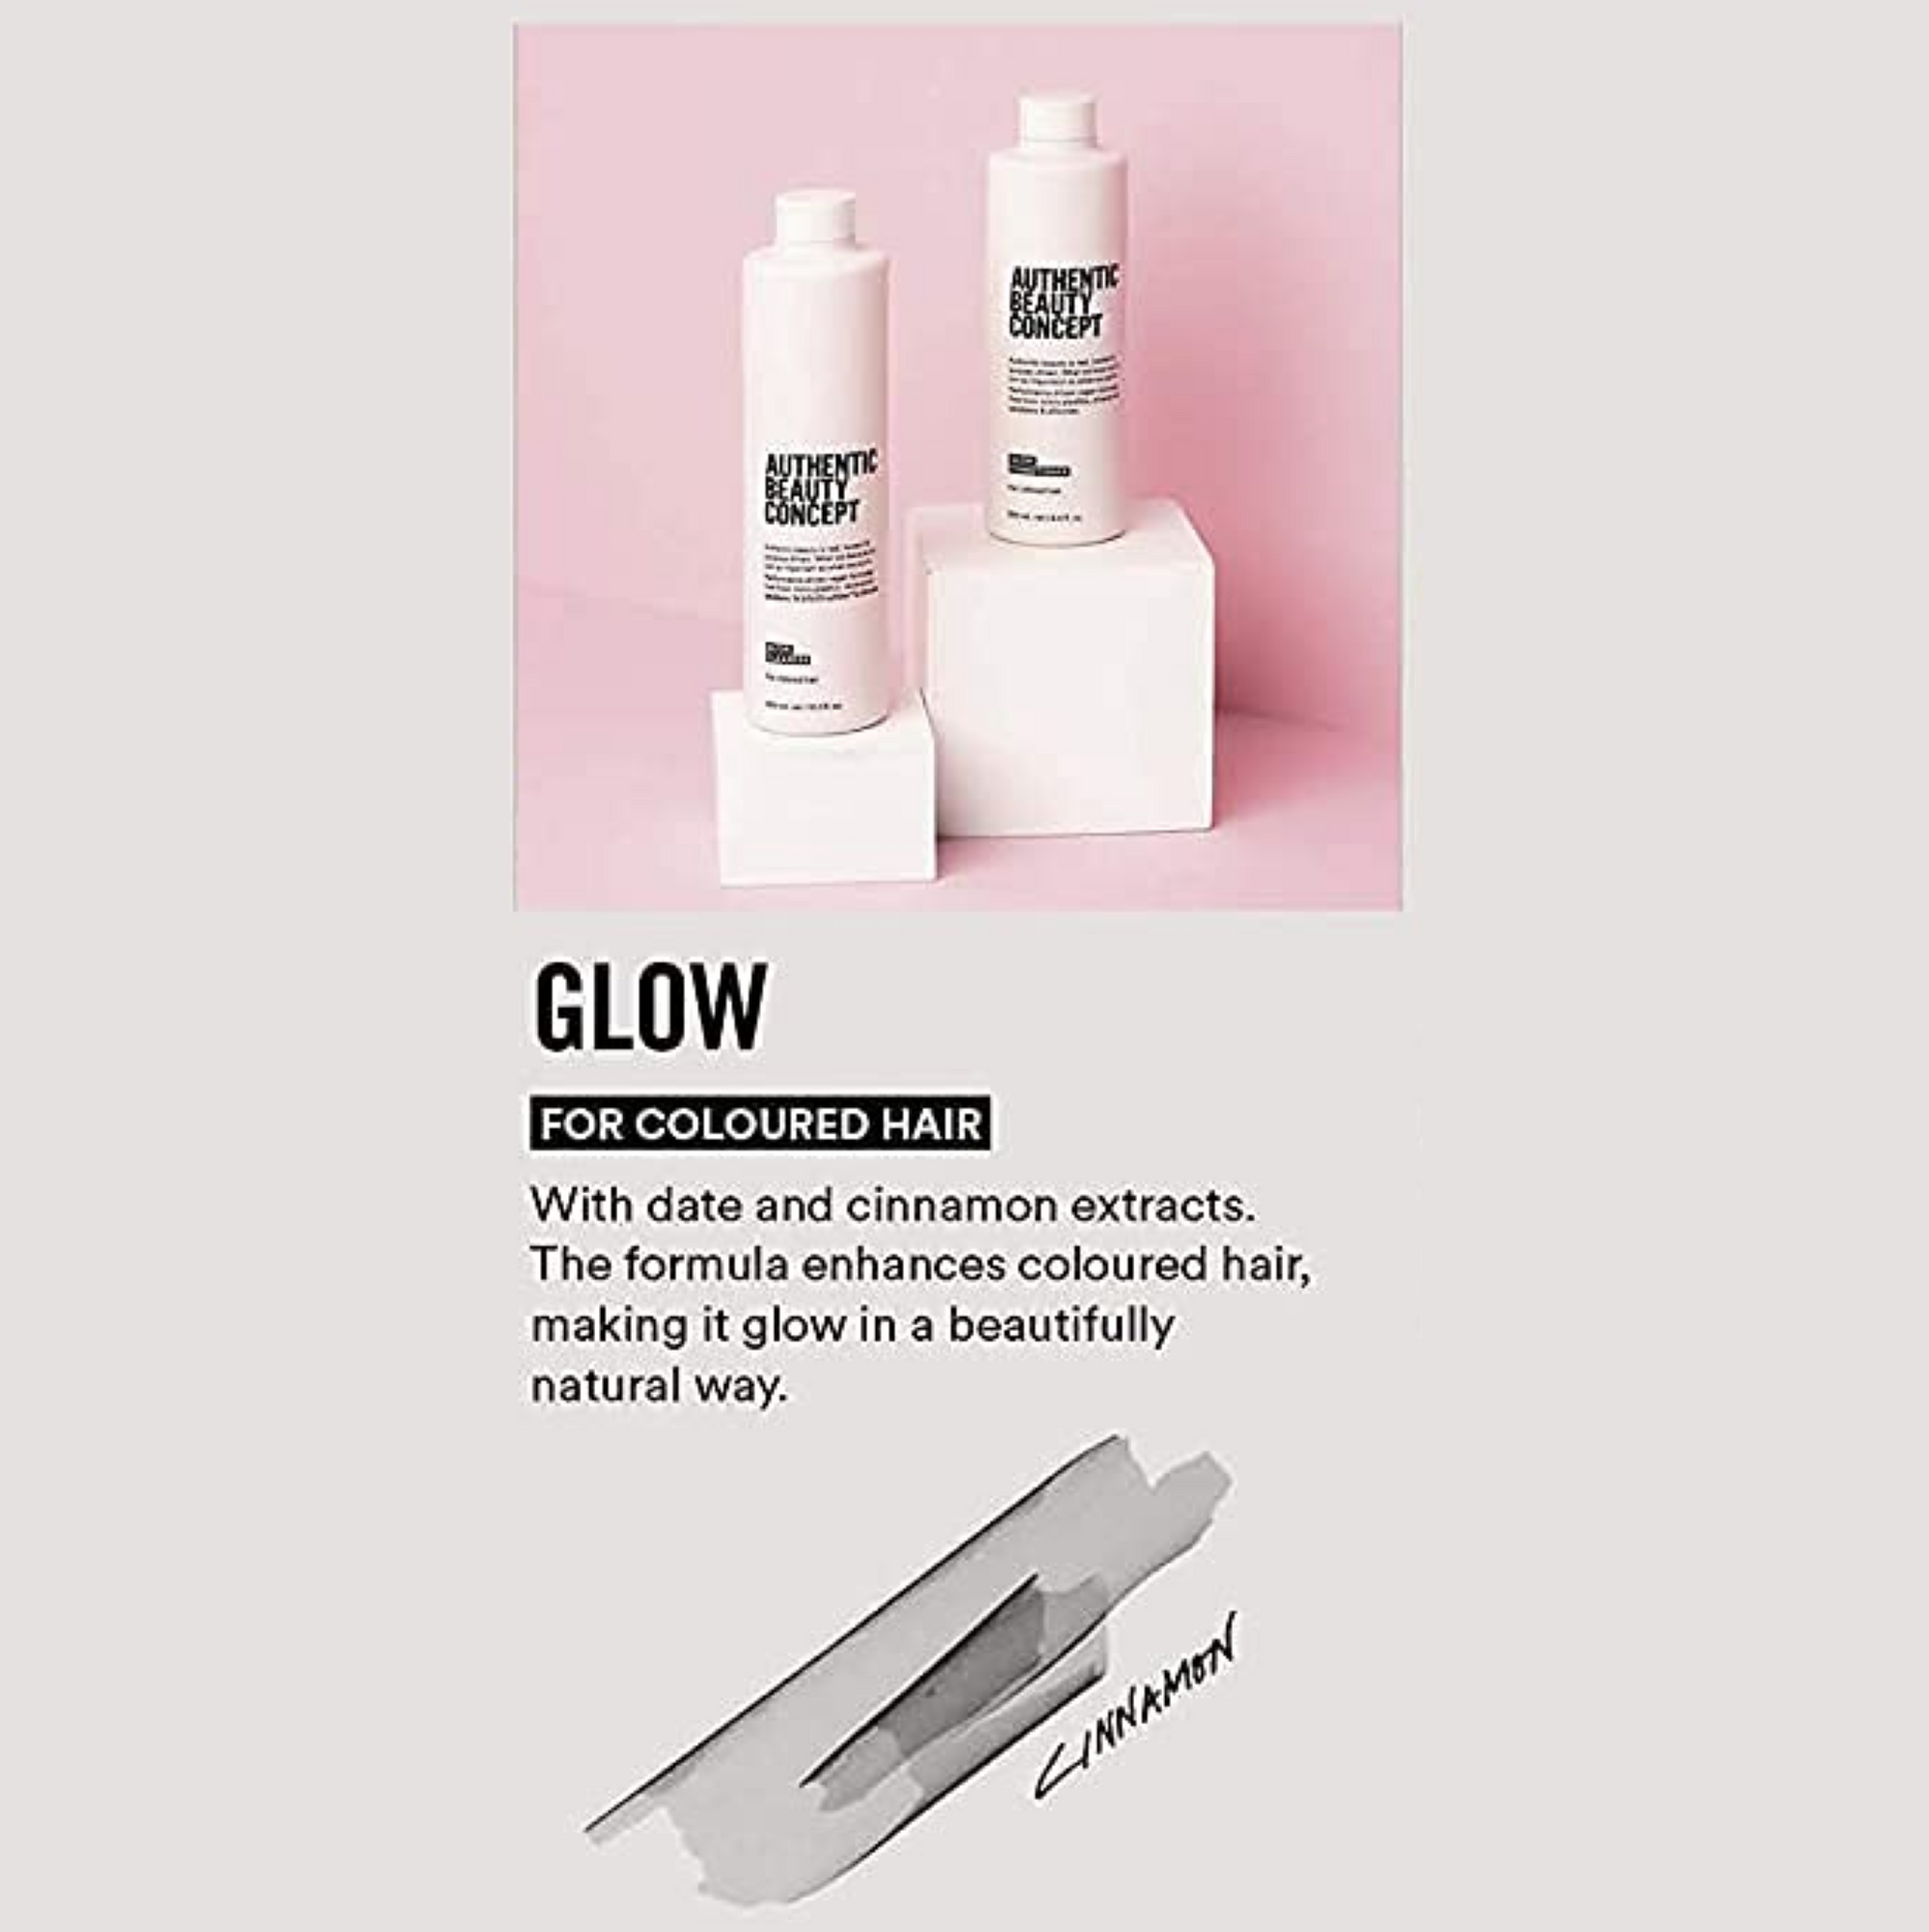 Authentic Beauty Concept Glow Cleanser / 10OZ